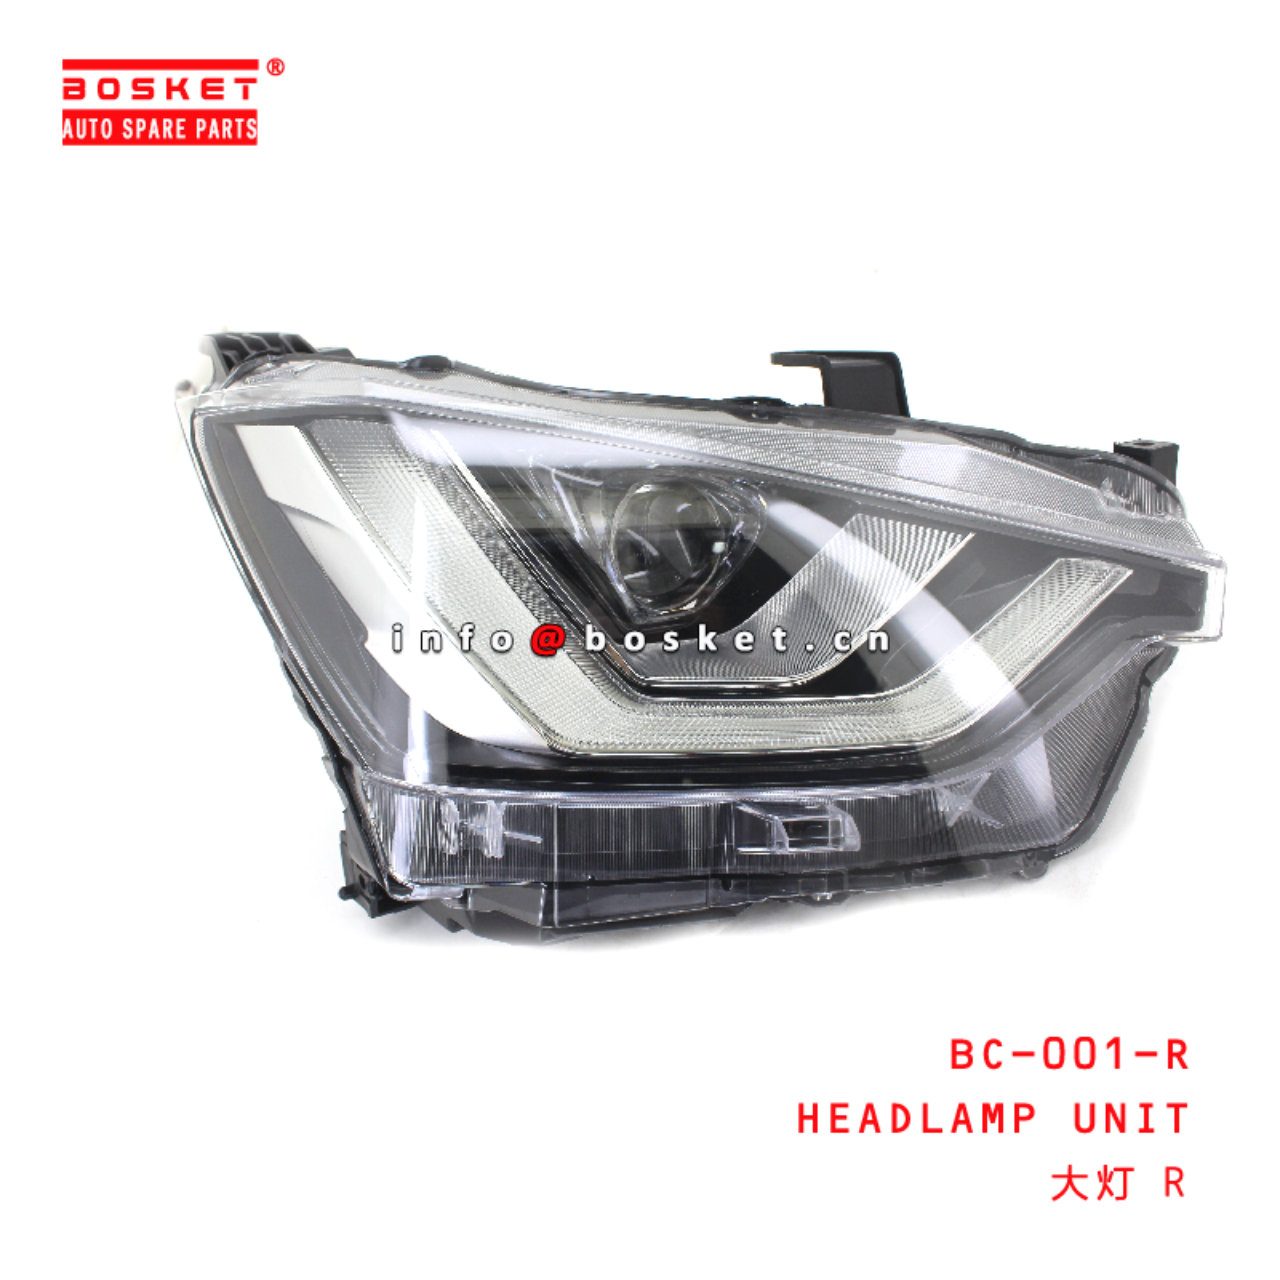 BC-001-R Headlamp Unit suitable for ISUZU DMAX2021  BC-001-R